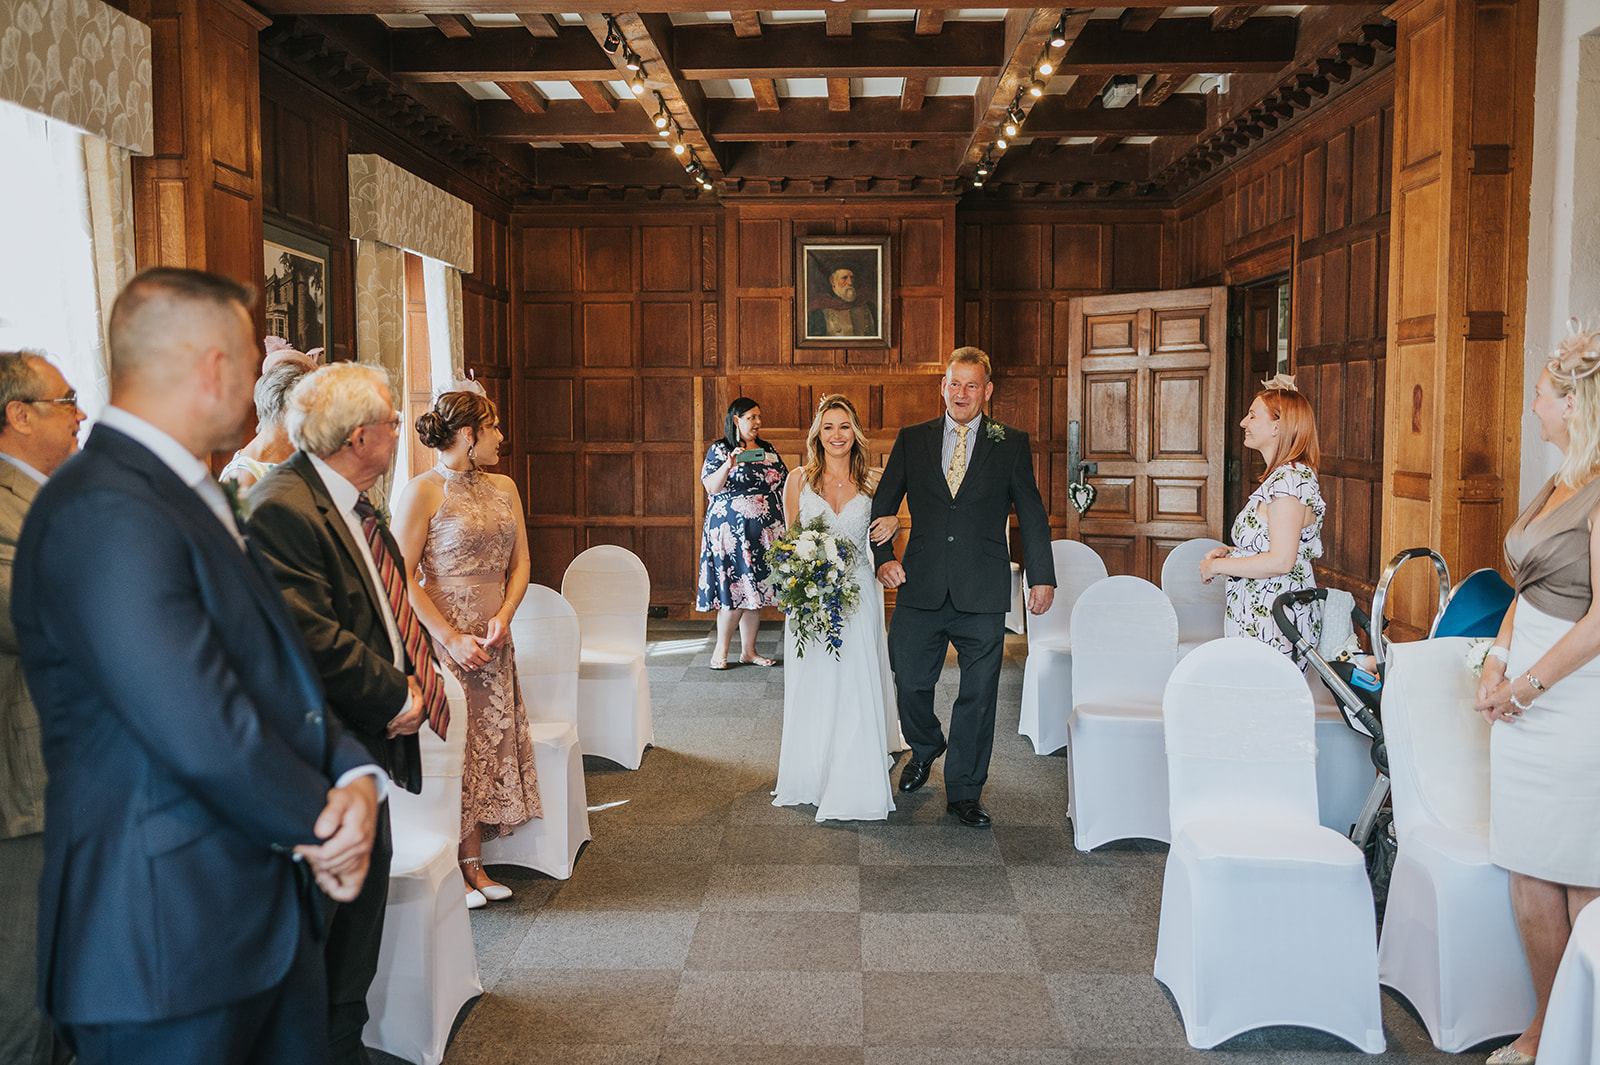 Wedding Ceremony - St. Andrews Castle, in Bury St Edmonds